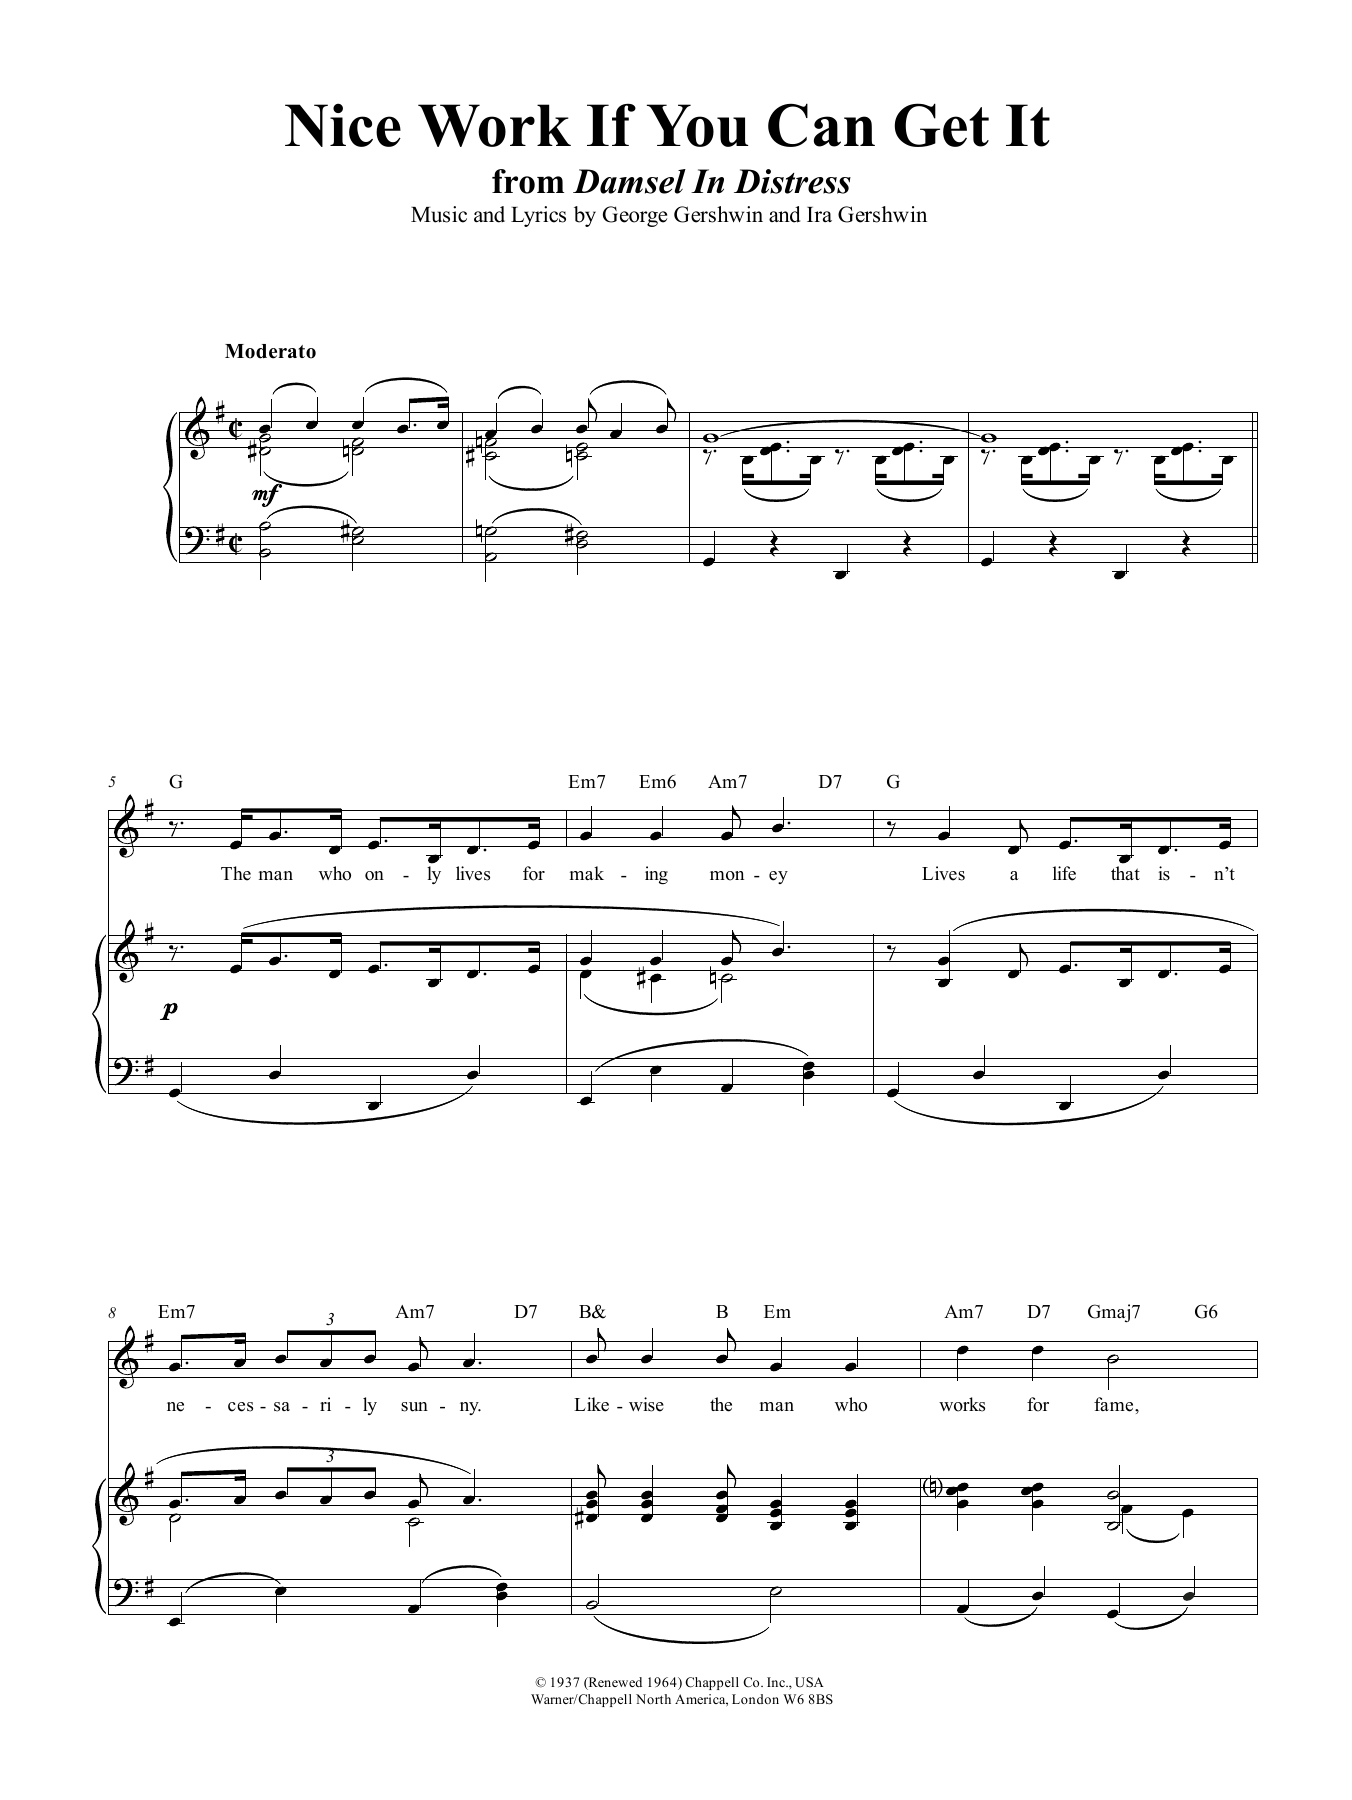 Download George Gershwin Nice Work If You Can Get It Sheet Music